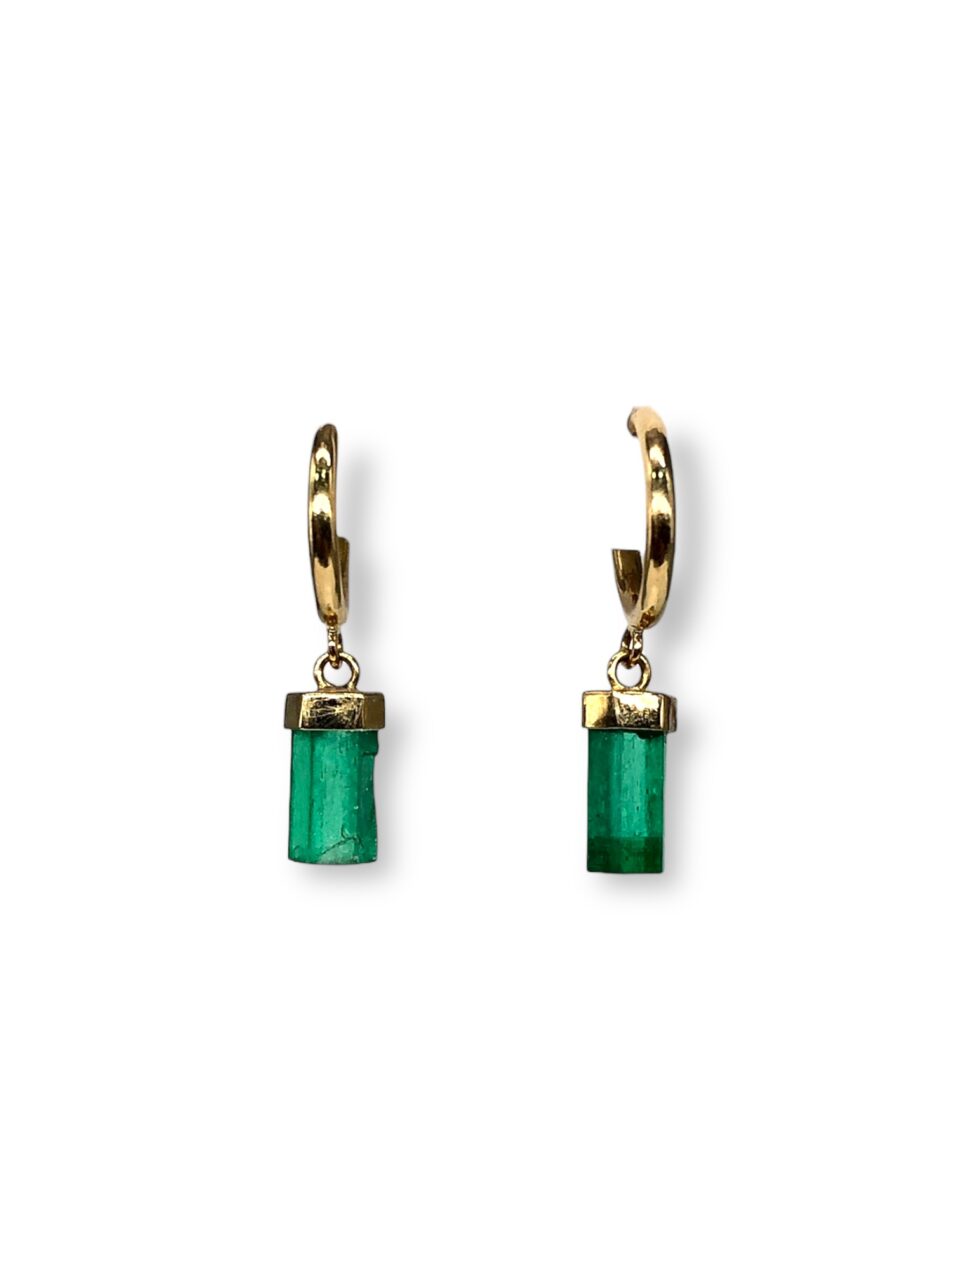 colombian emeralds, muzo emeralds, alpine green, george smith, emerald earrings